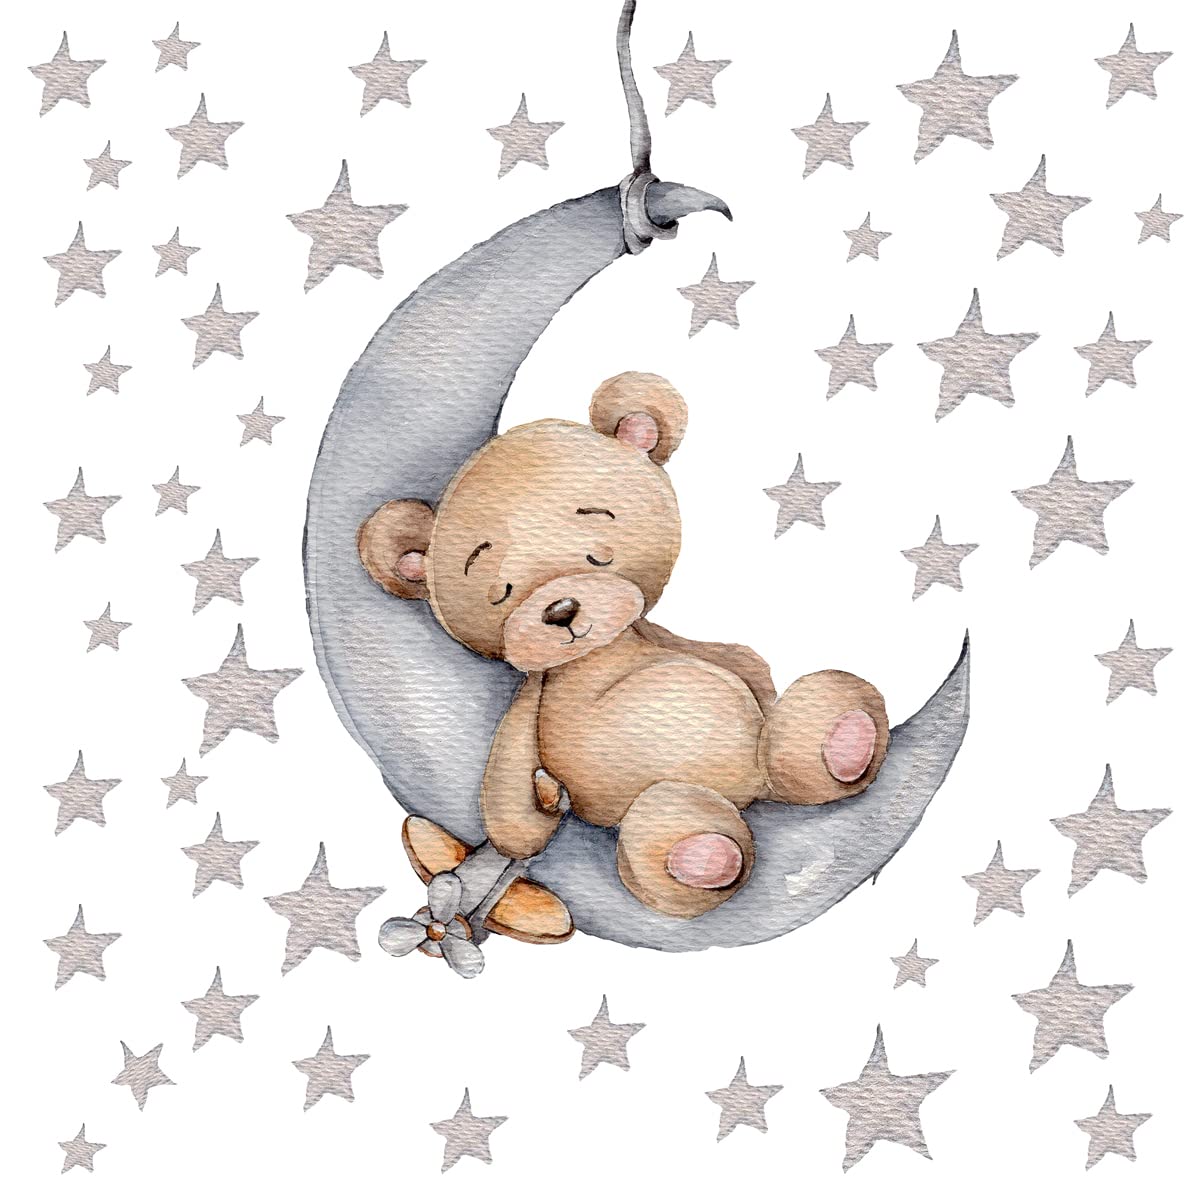 DEKOSH Moon & Stars Nursery Wall Decal with Sleepy Bear for Baby Nursery Decor